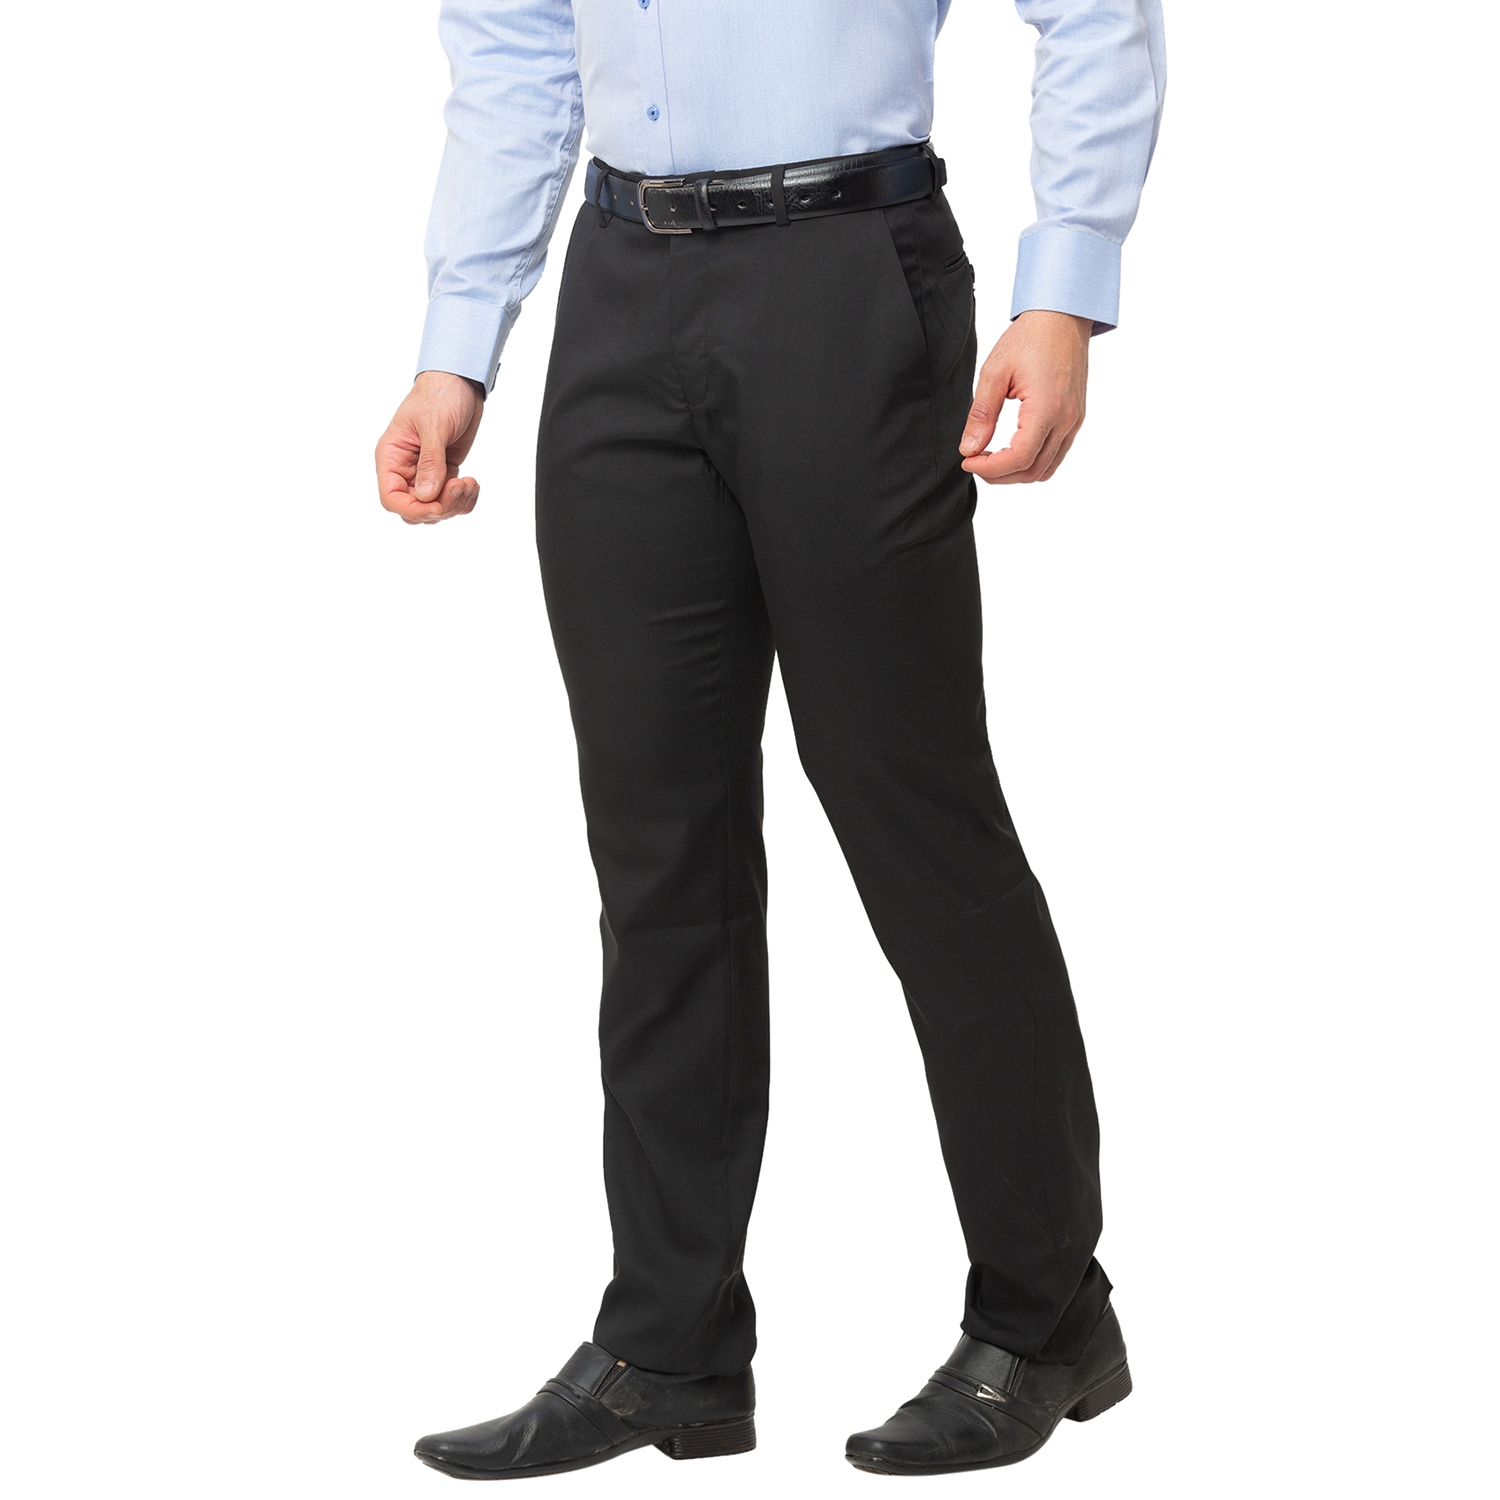 globus | Men's Black Cotton Blend Solid Formal Trousers 3